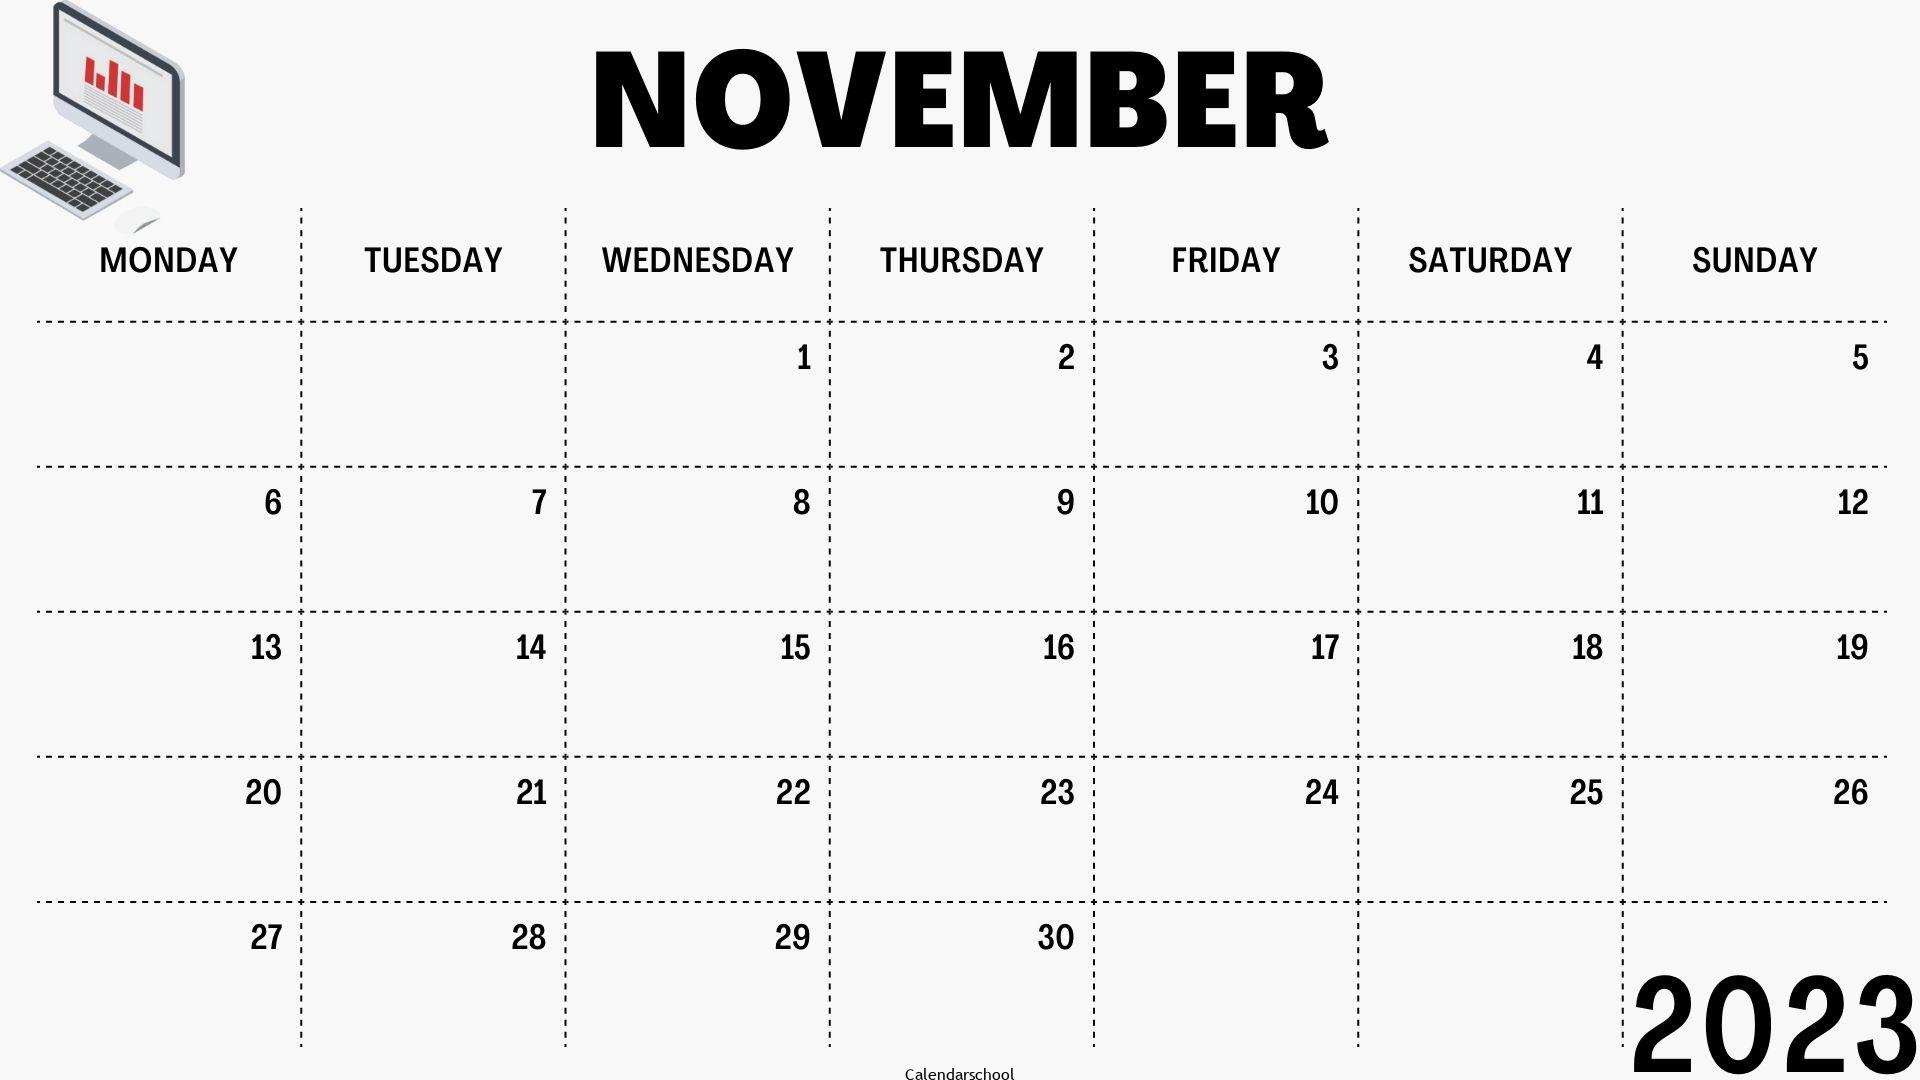 November 2023 Weekly Calendar Template